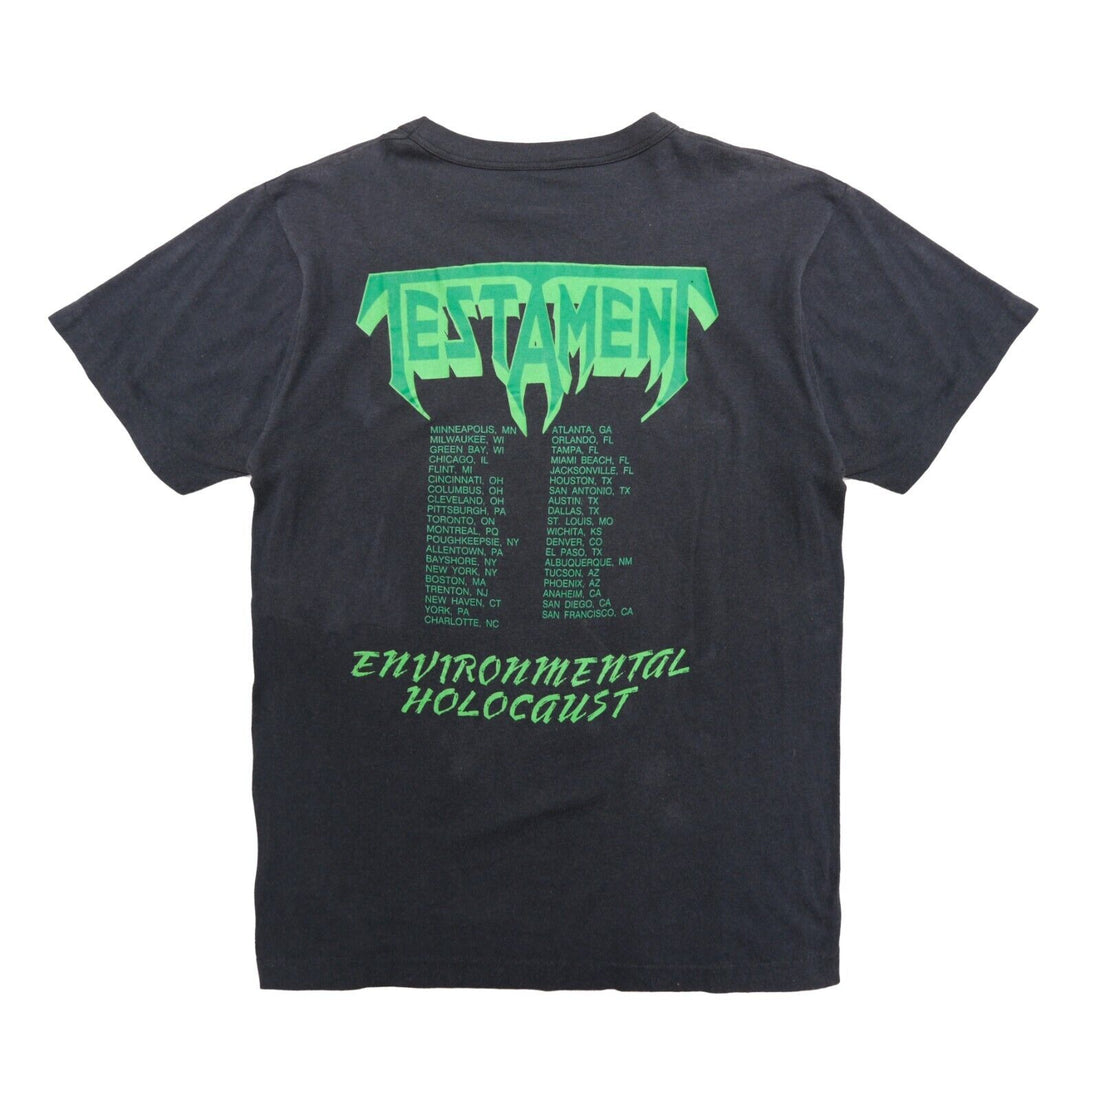 Vintage Testament Greenhouse Effect Enivironmental Holocaust T-Shirt XL Band Tee